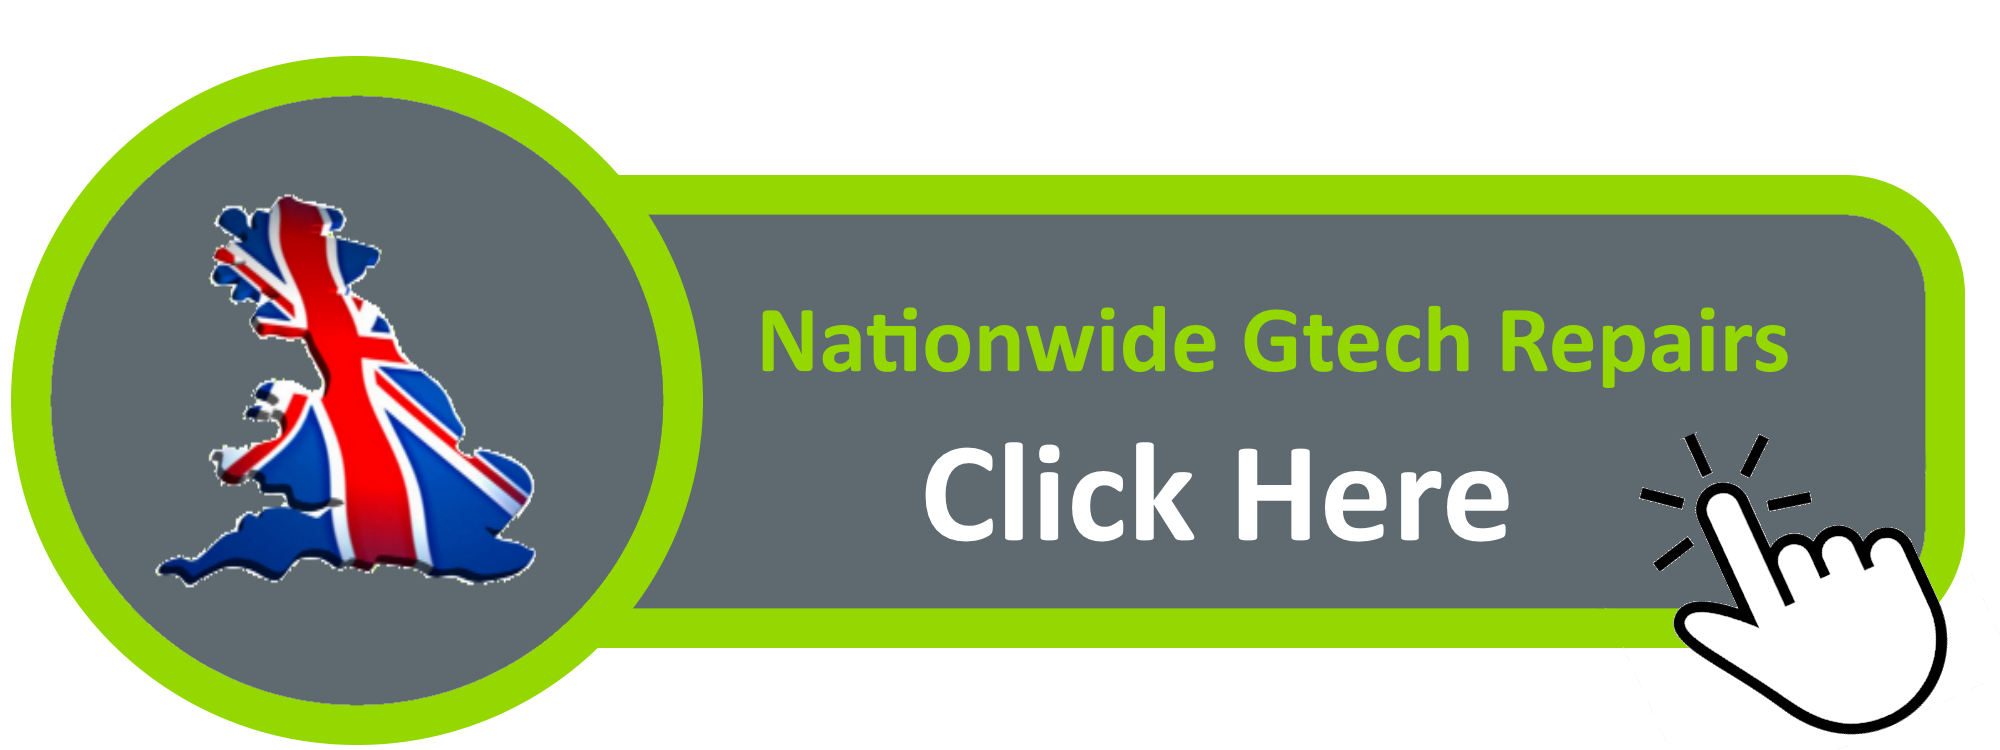 nationwide gtech repairs link